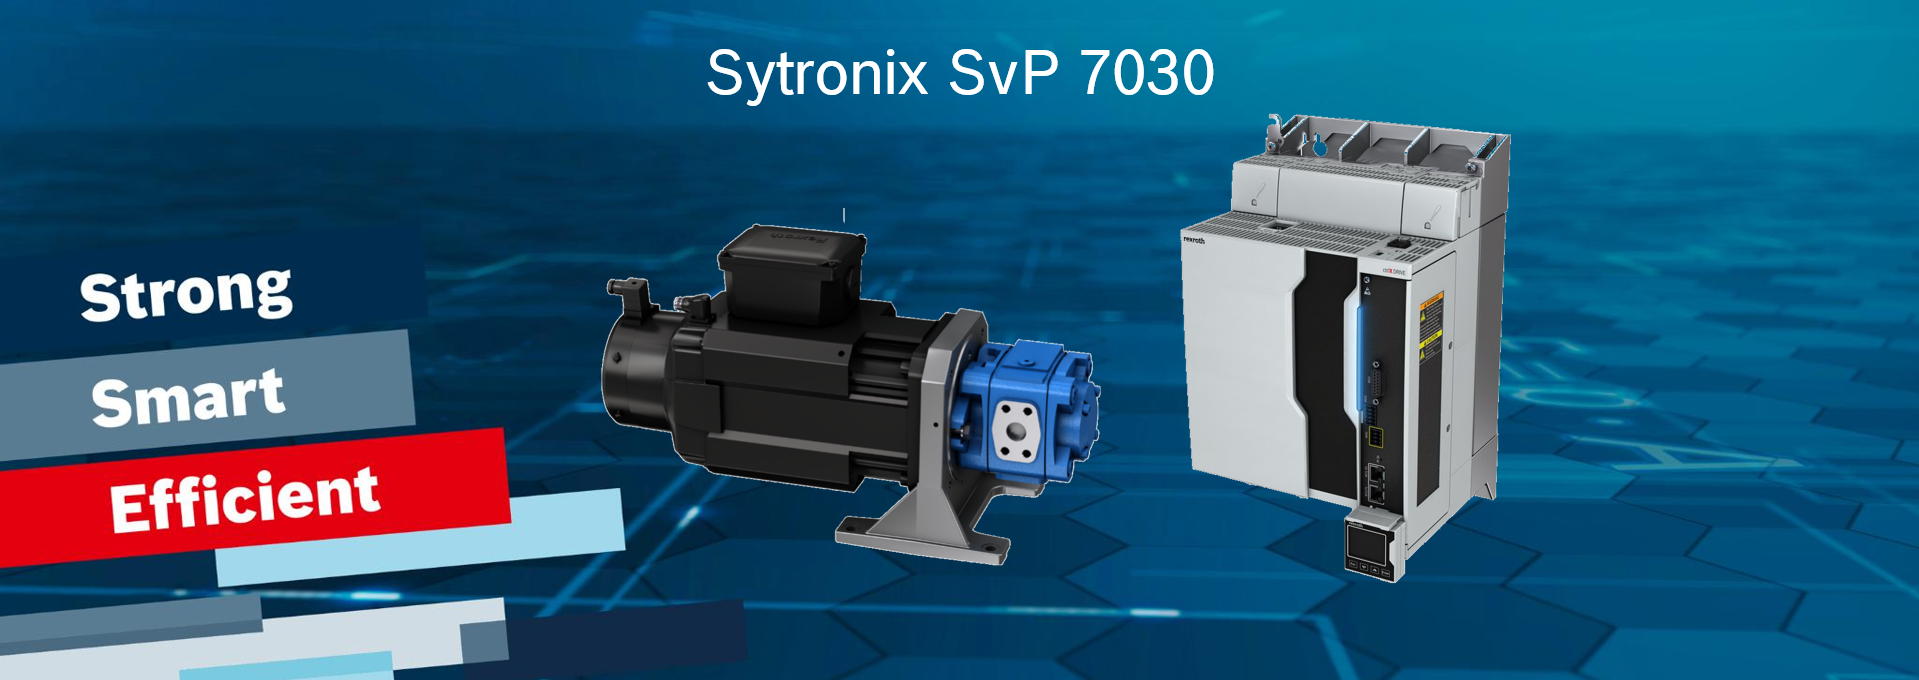 Sytronix SvP 7030